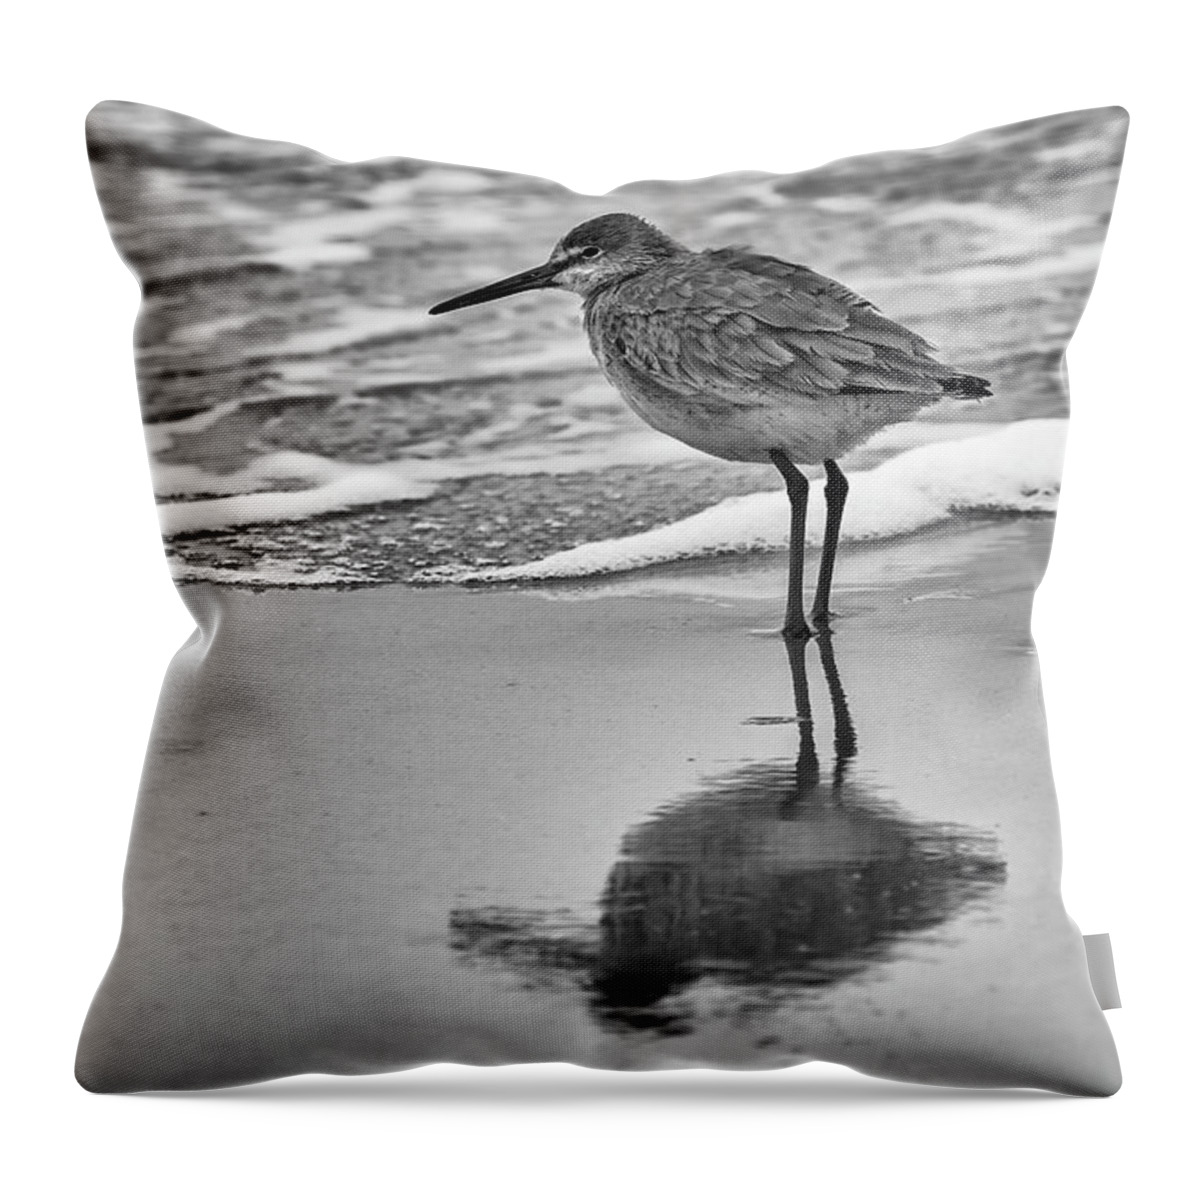 Bird Throw Pillow featuring the photograph Eastern Willet Winter Reflection by Fon Denton